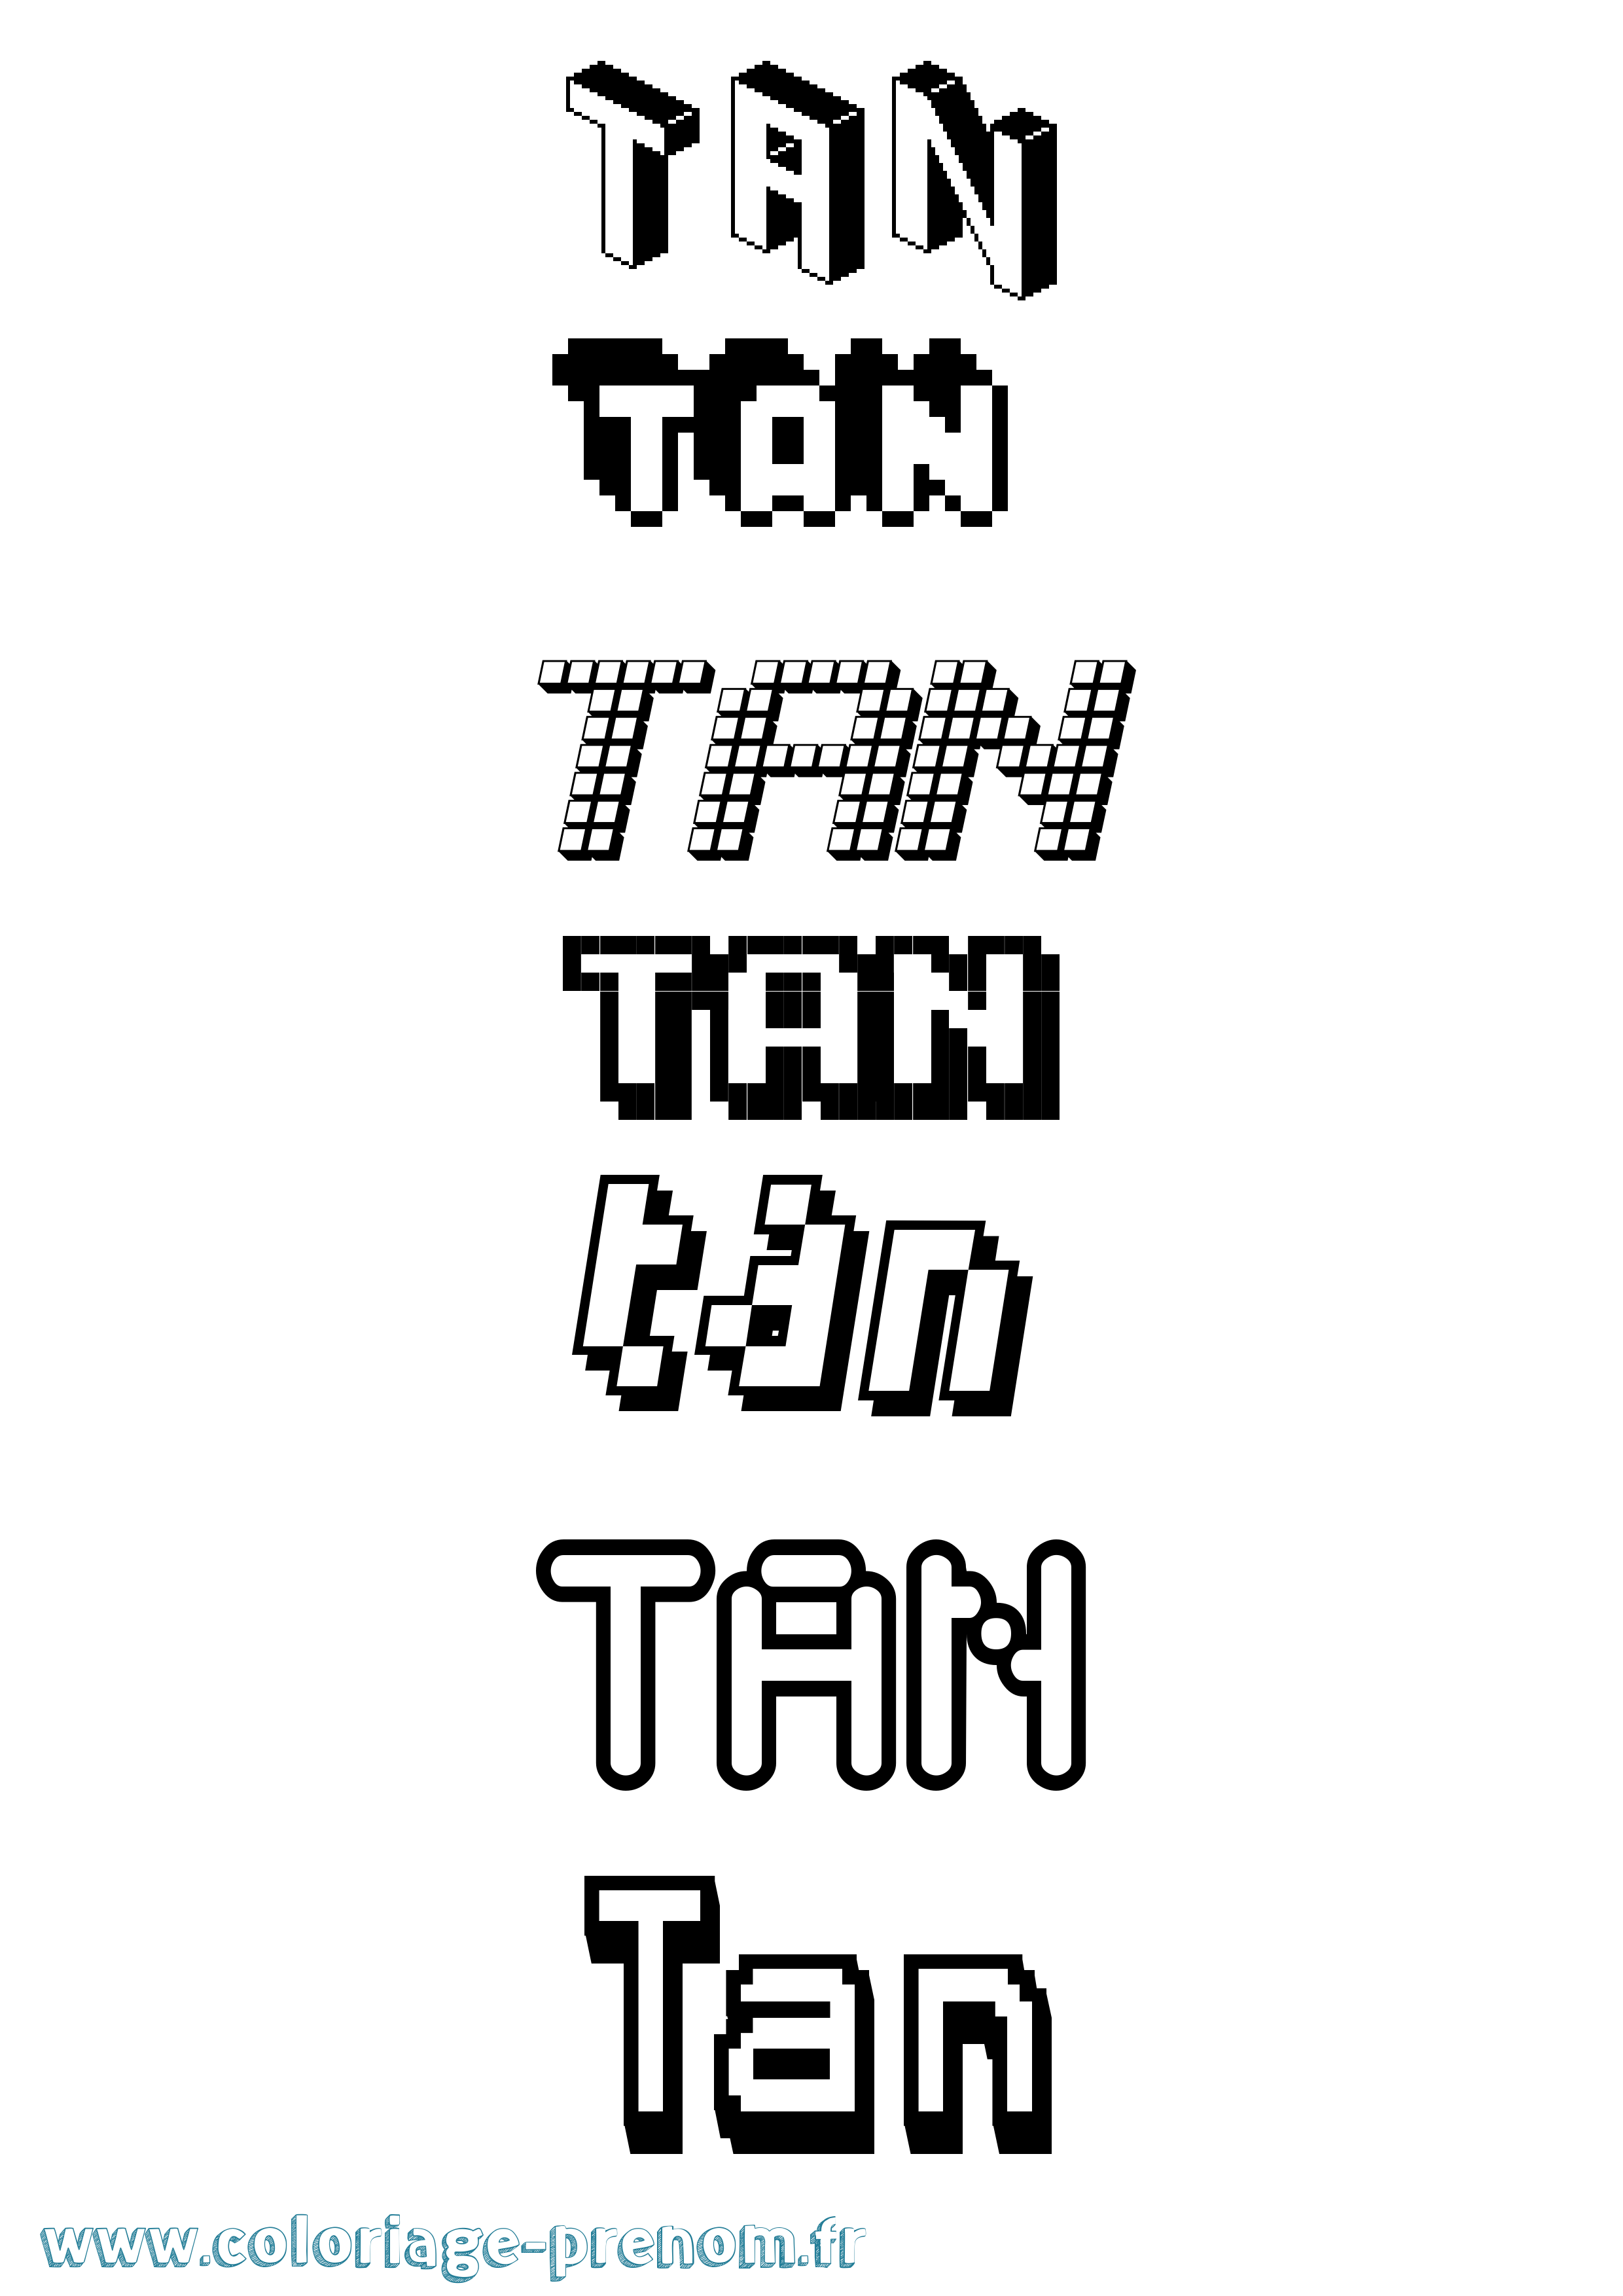 Coloriage prénom Tan Pixel